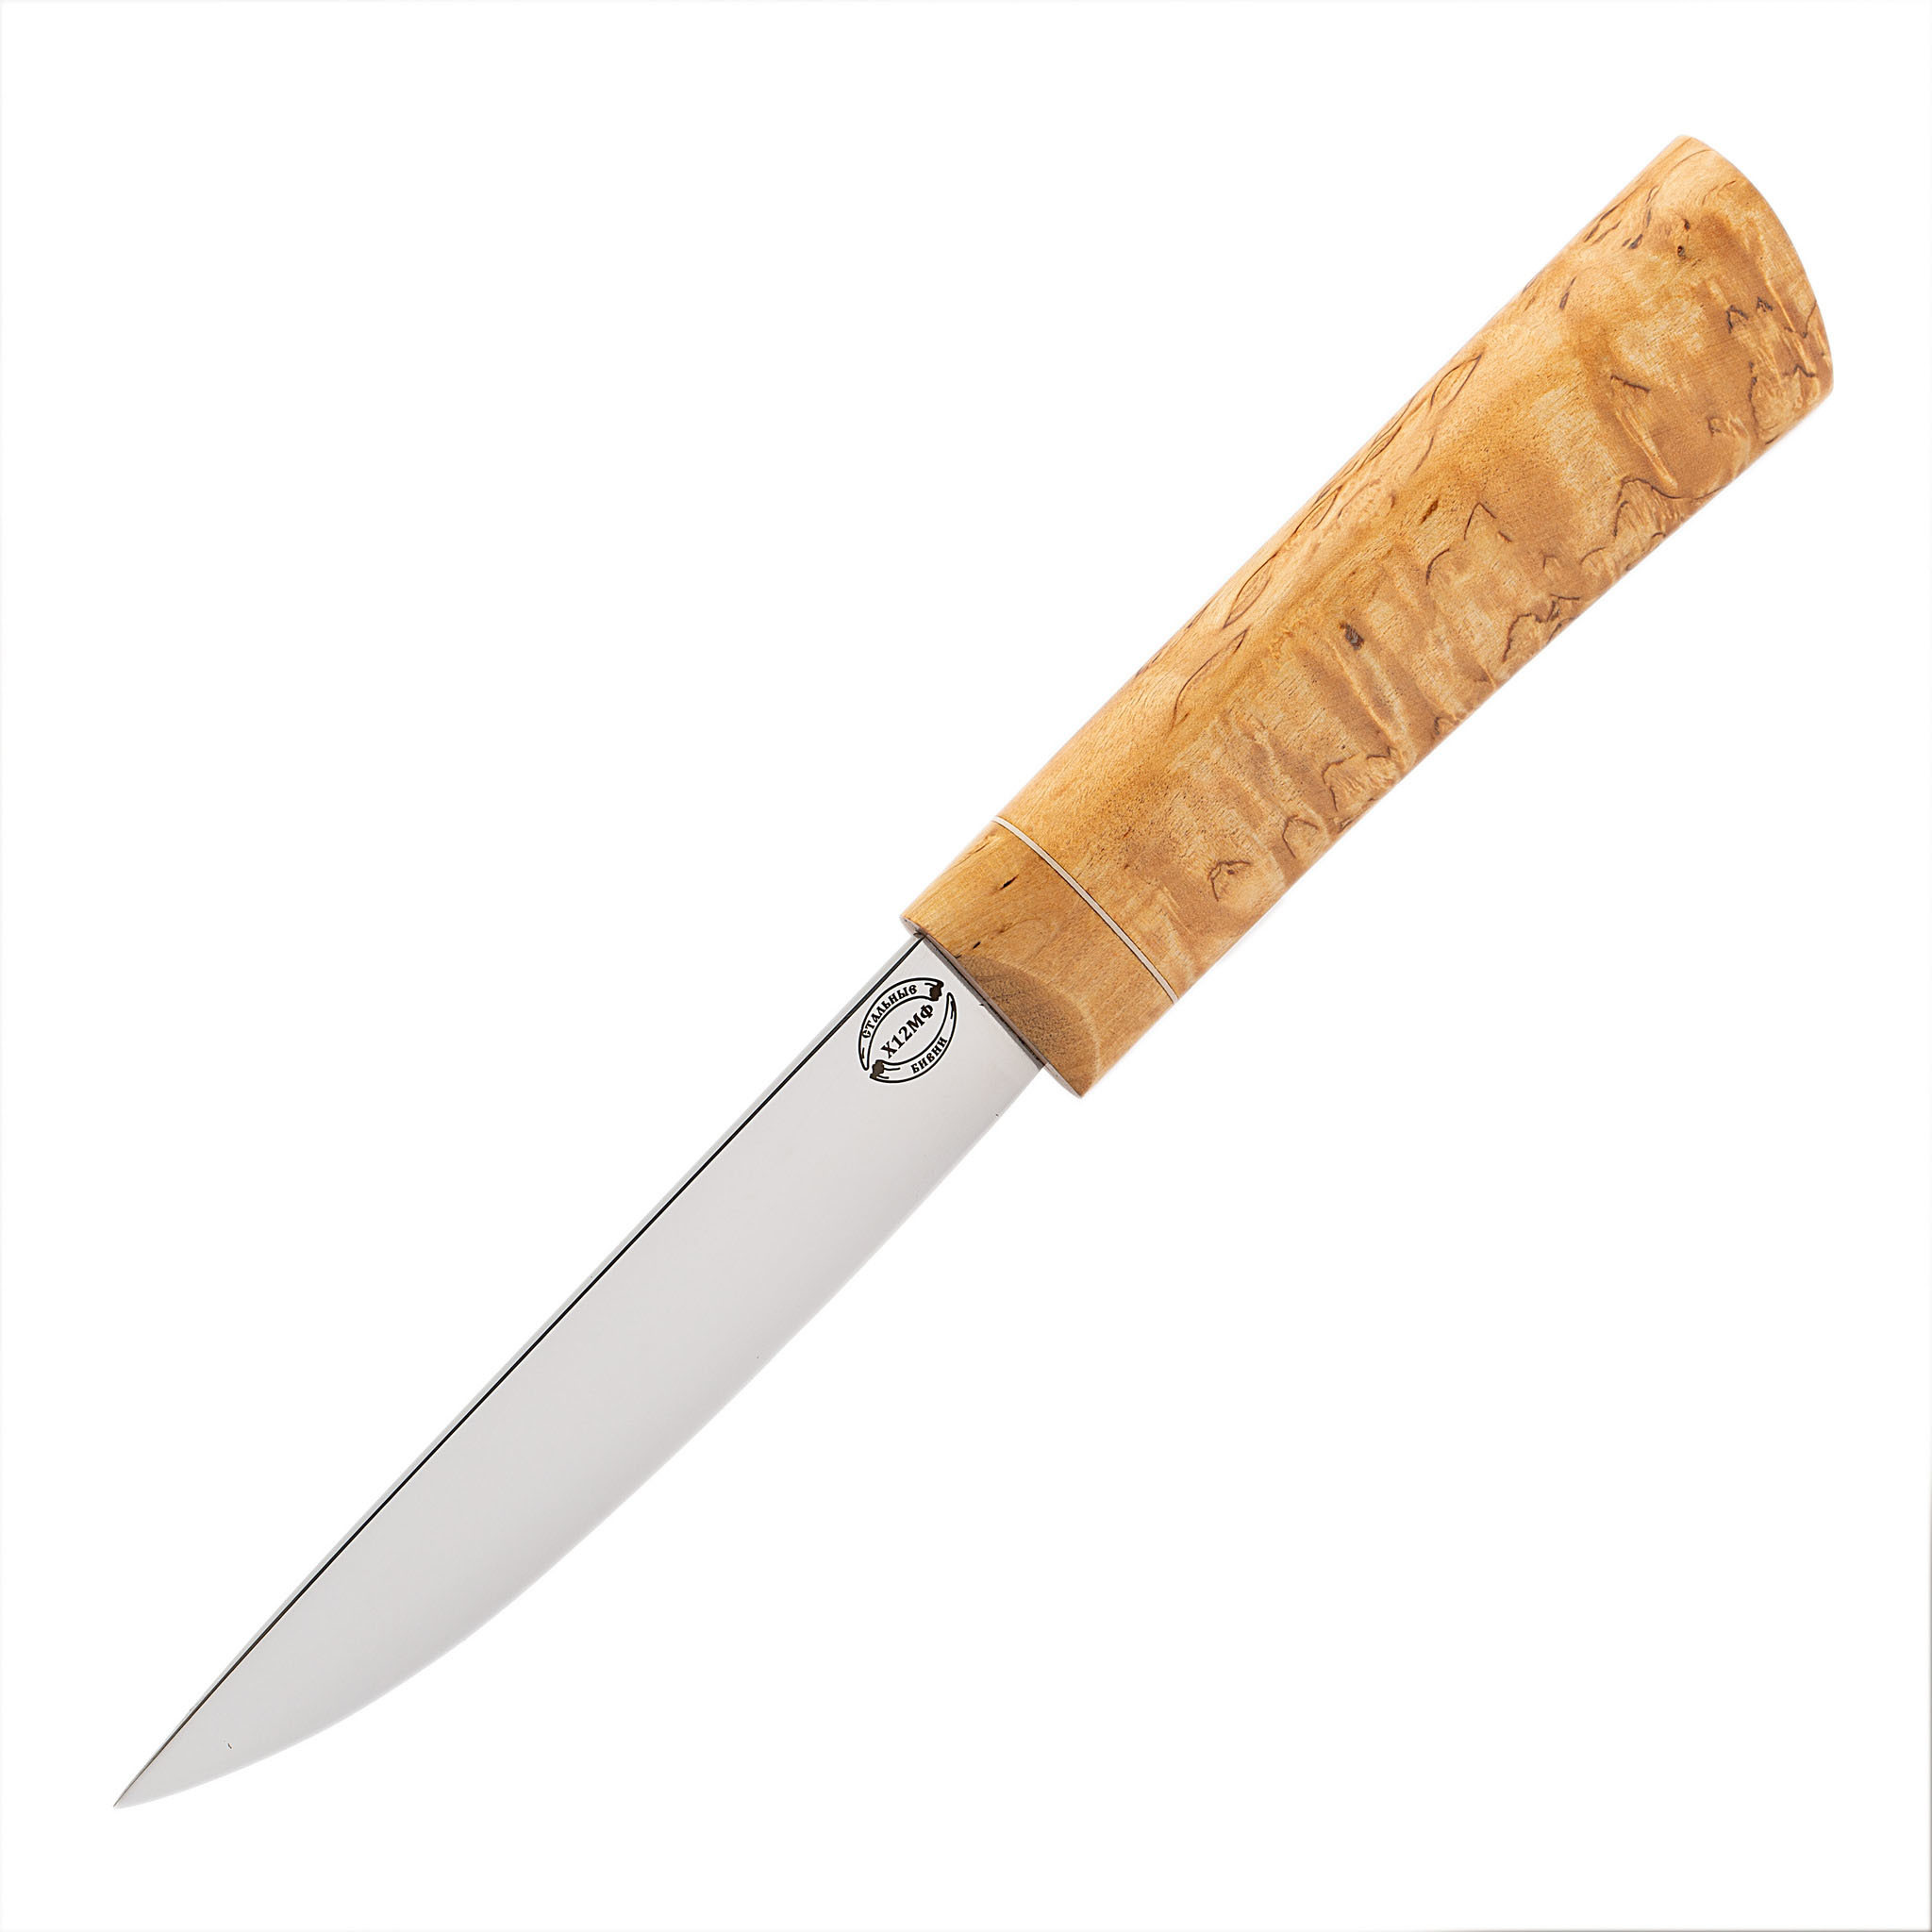 Нож Якутский средний, сталь Х12 МФ, рукоять карельская береза